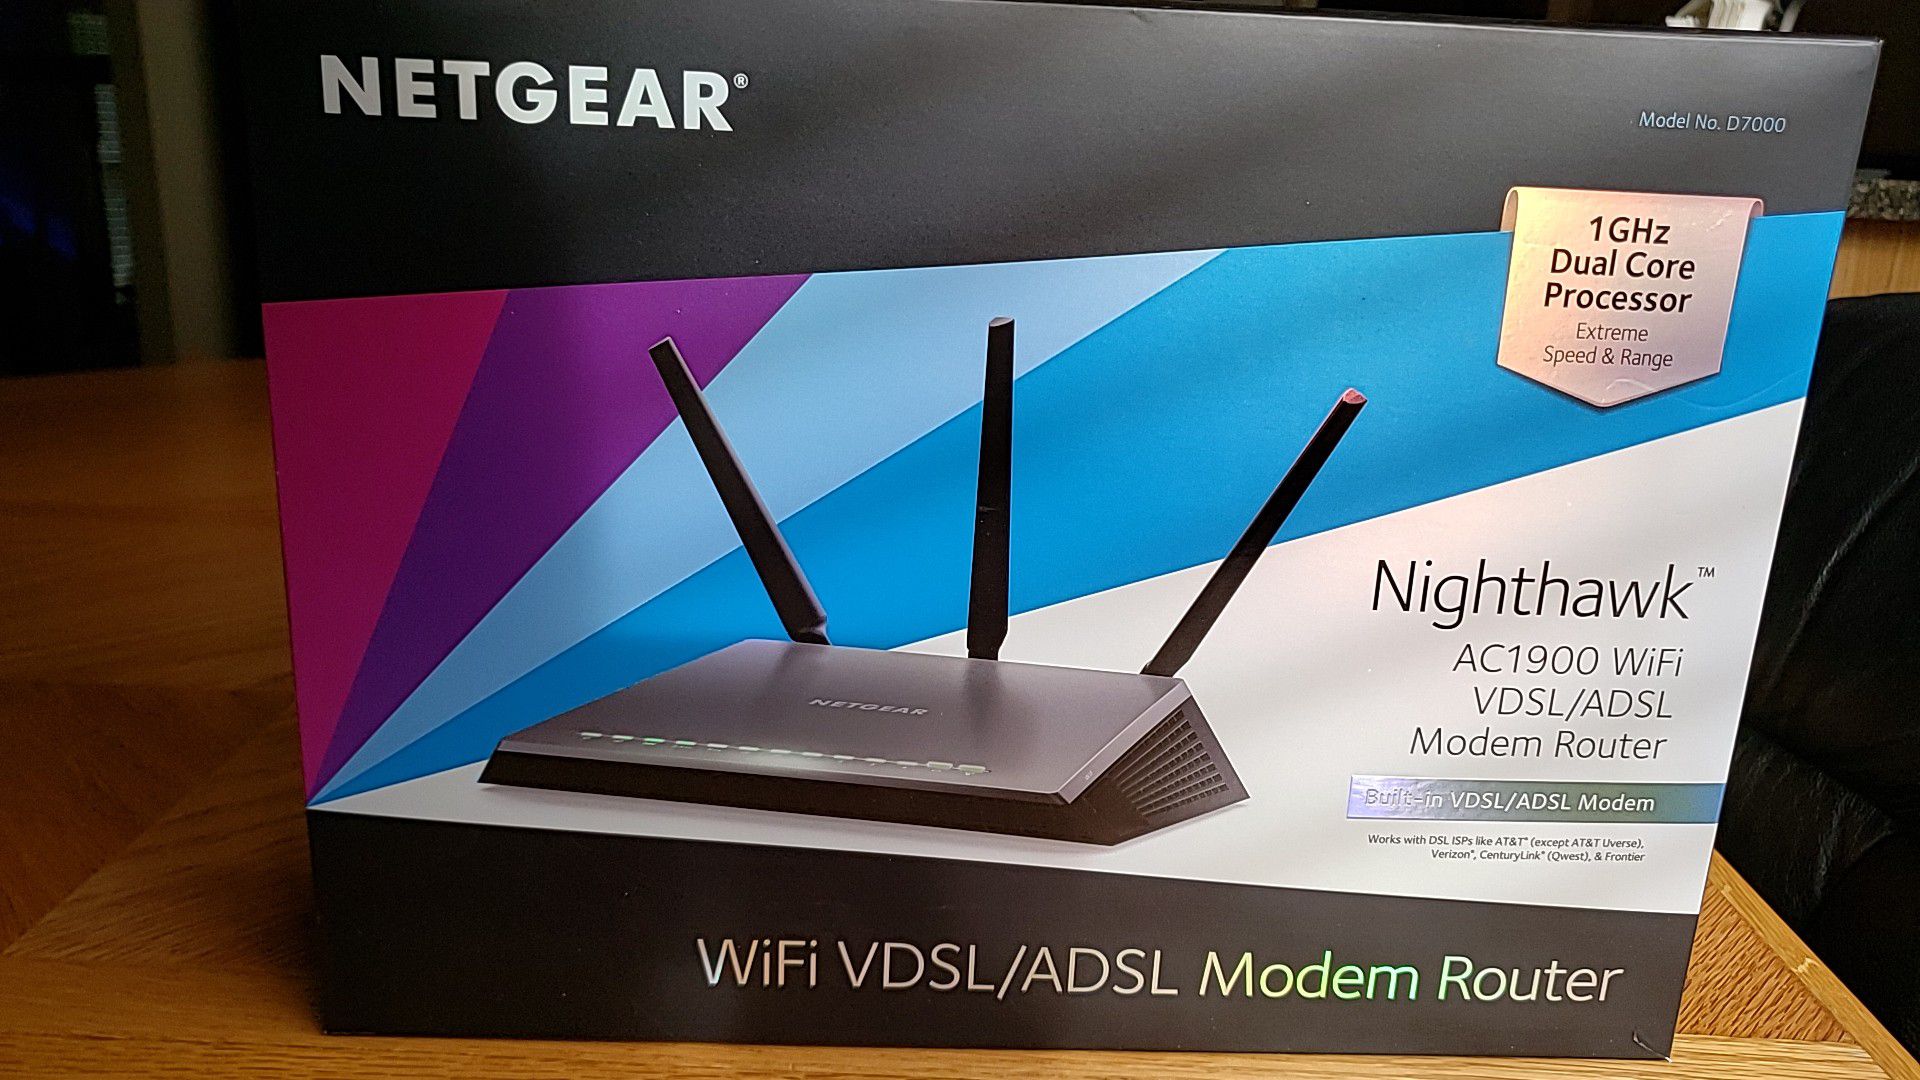 Netgear Nighthawk AC1900 WiFi VDSL/ADSL Modem Router